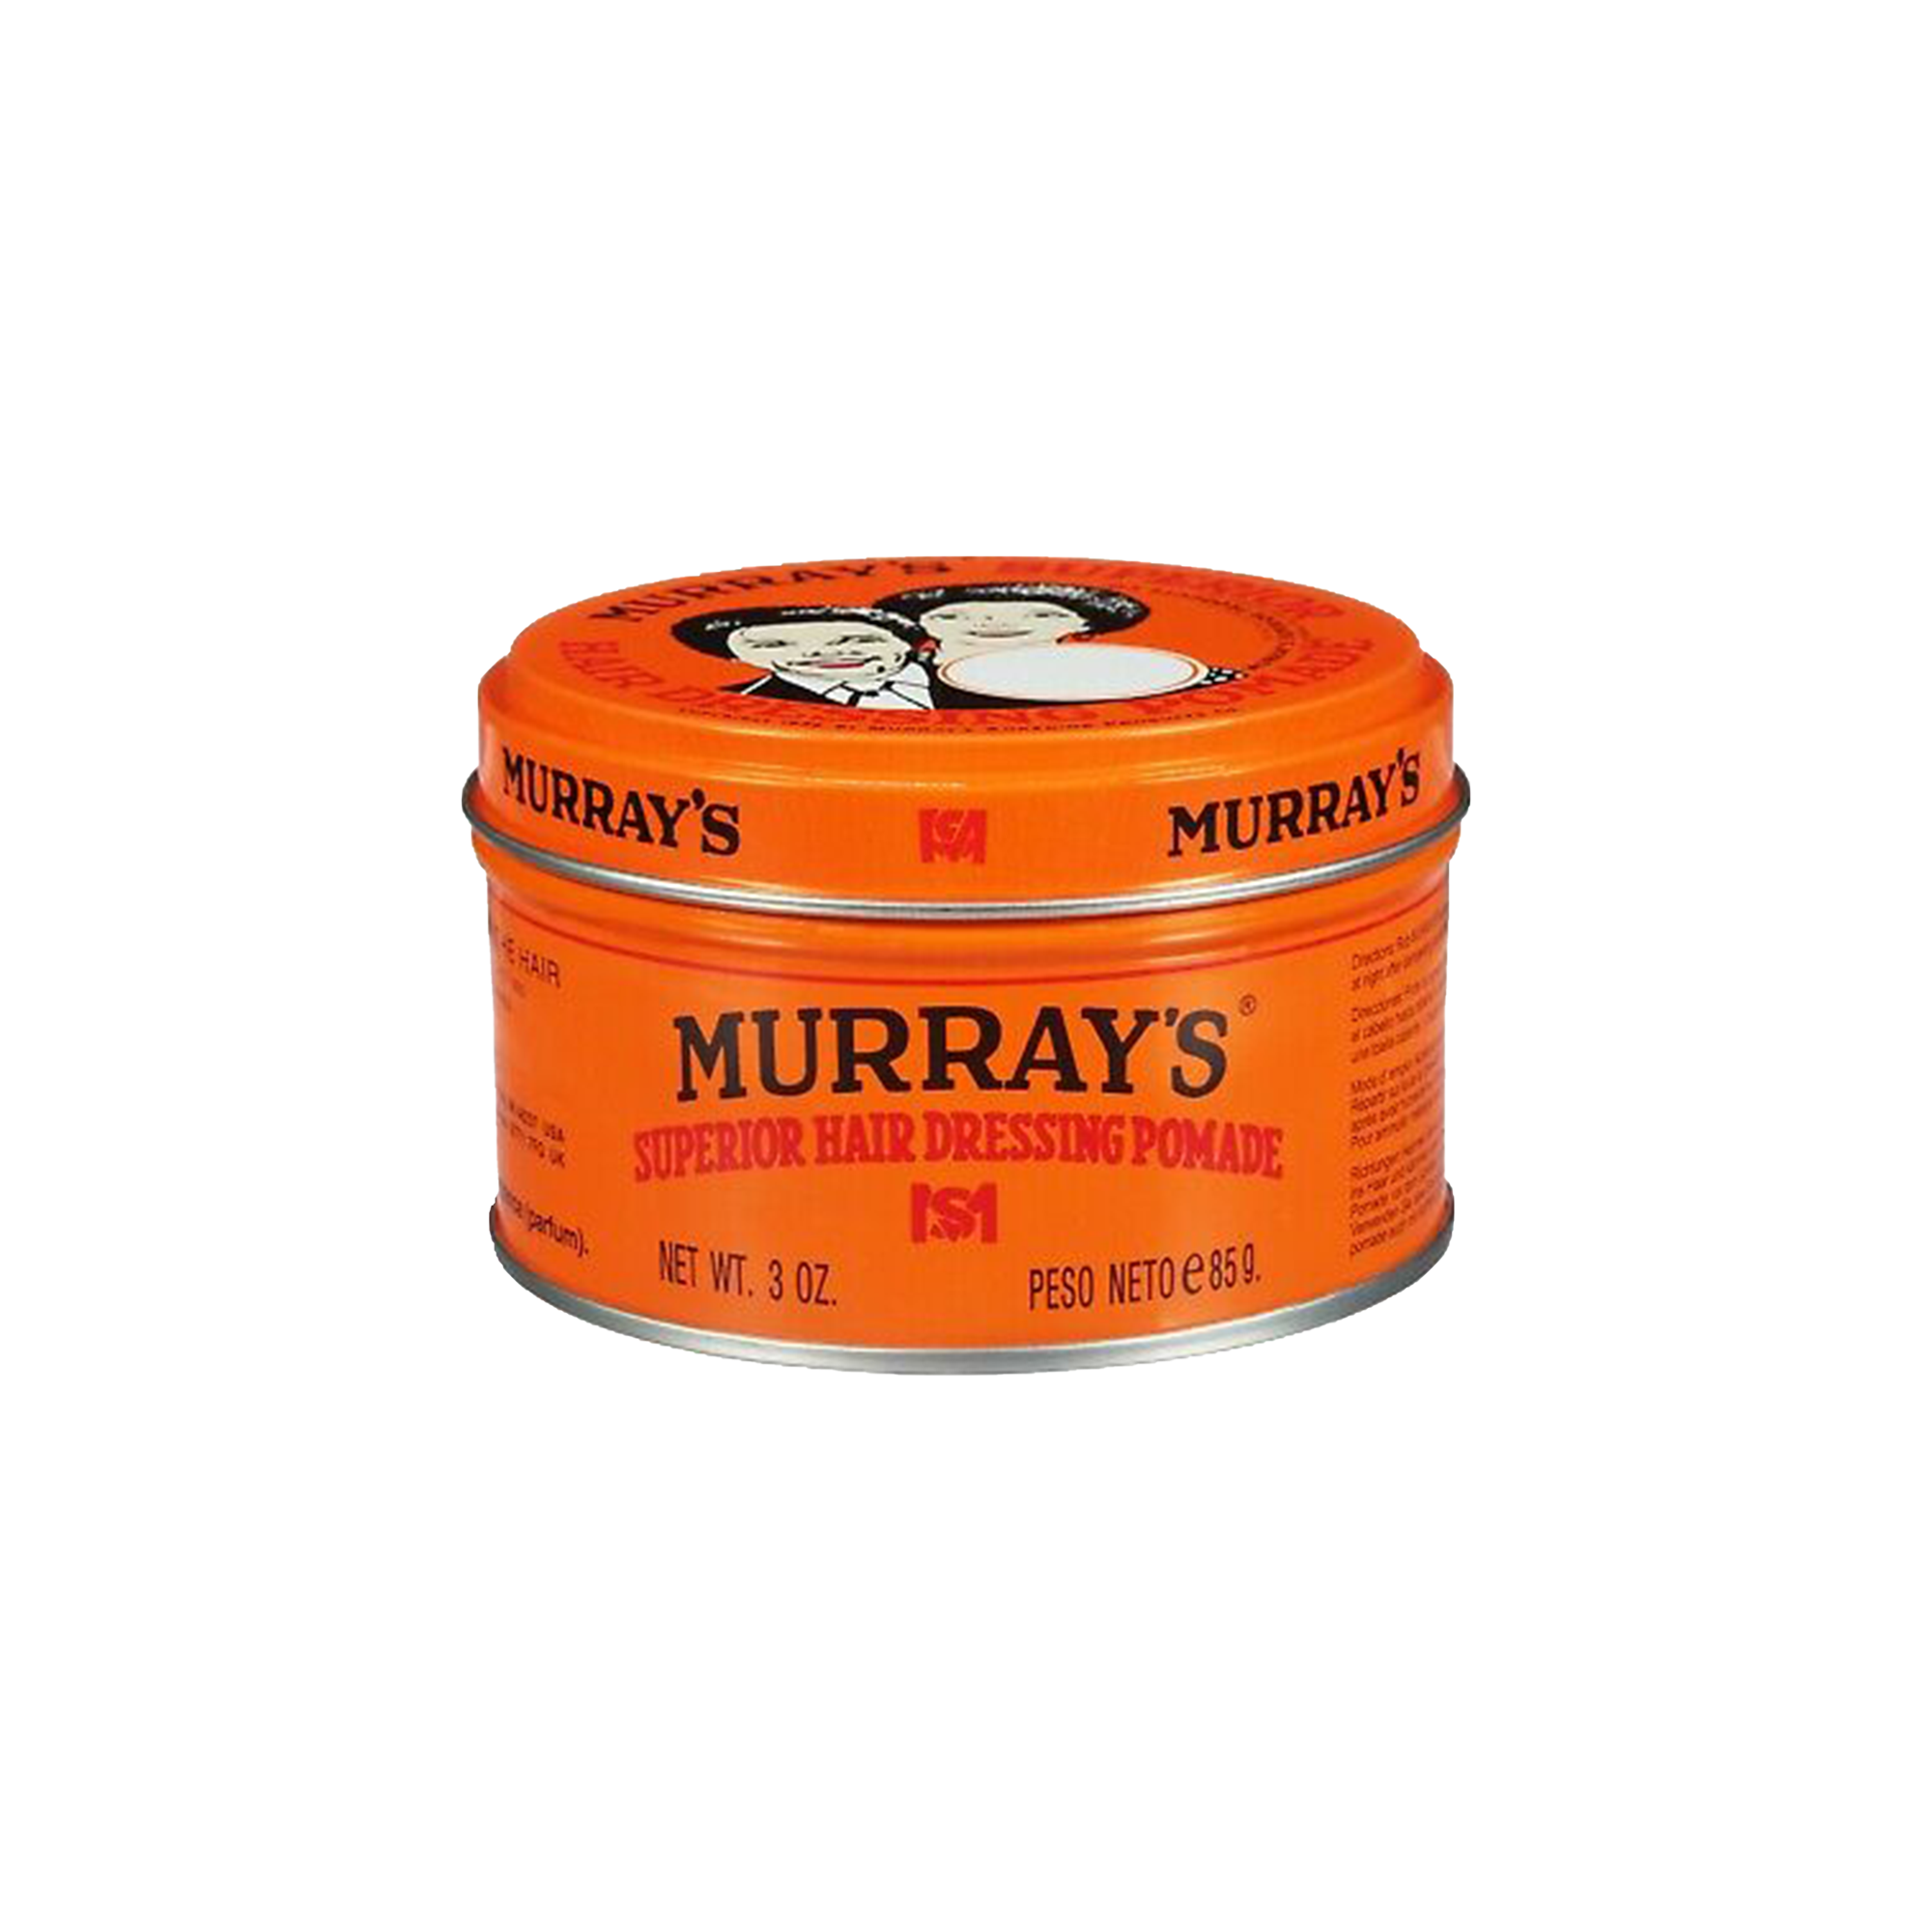 Murray's Superior Hair Dressing Pomade Vintage | eBay